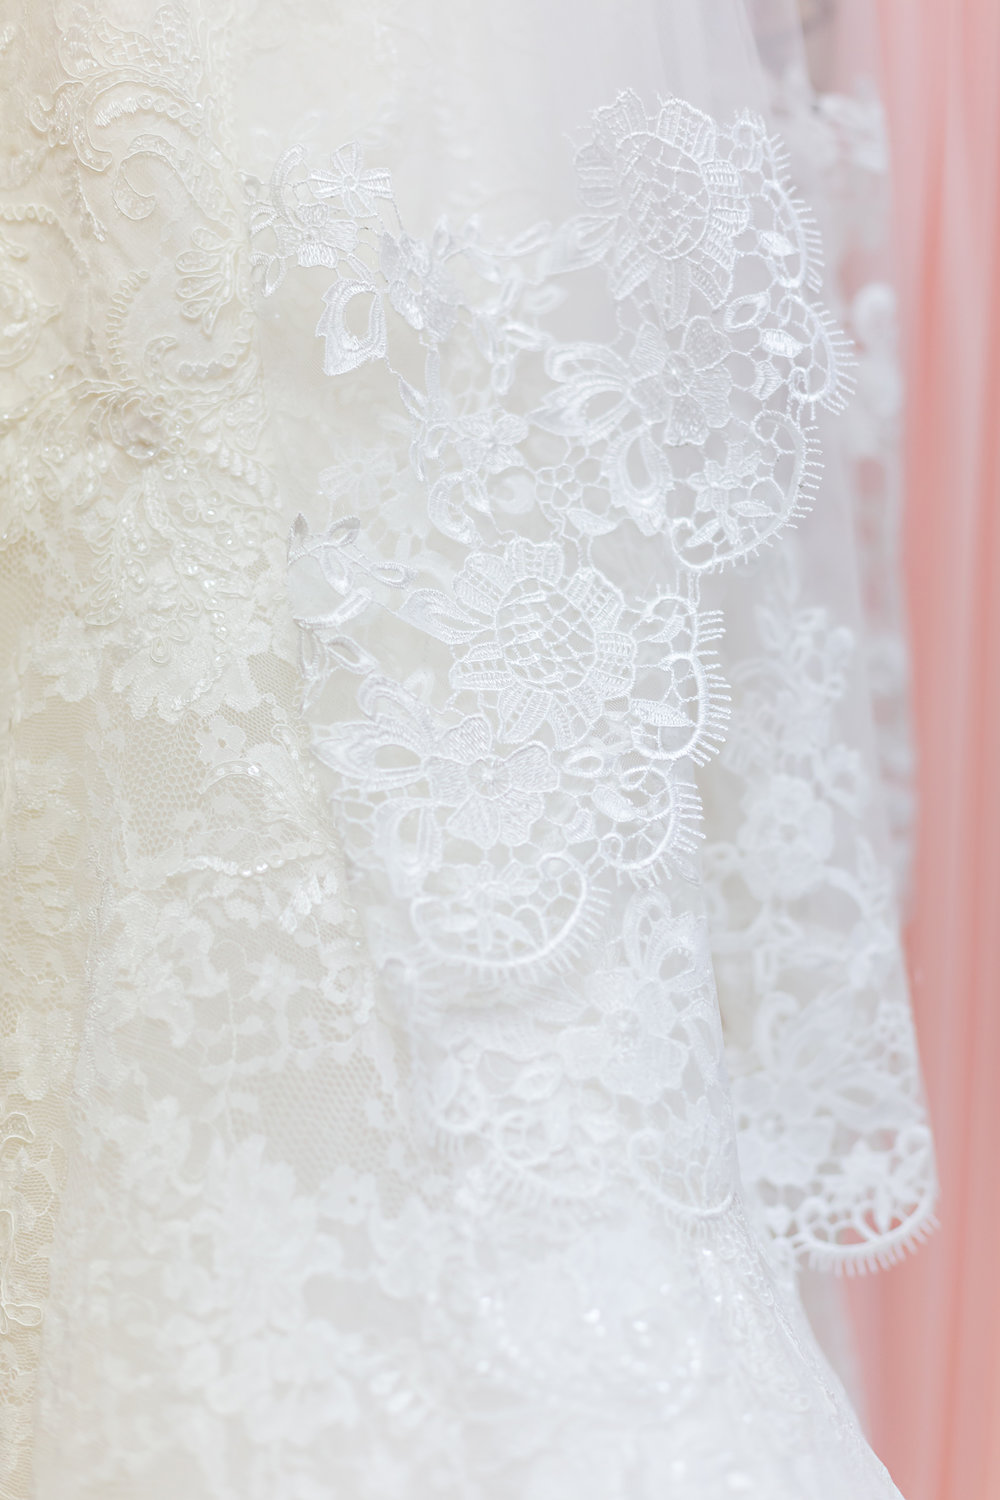 SSP Fall wedding| Bridal gown details